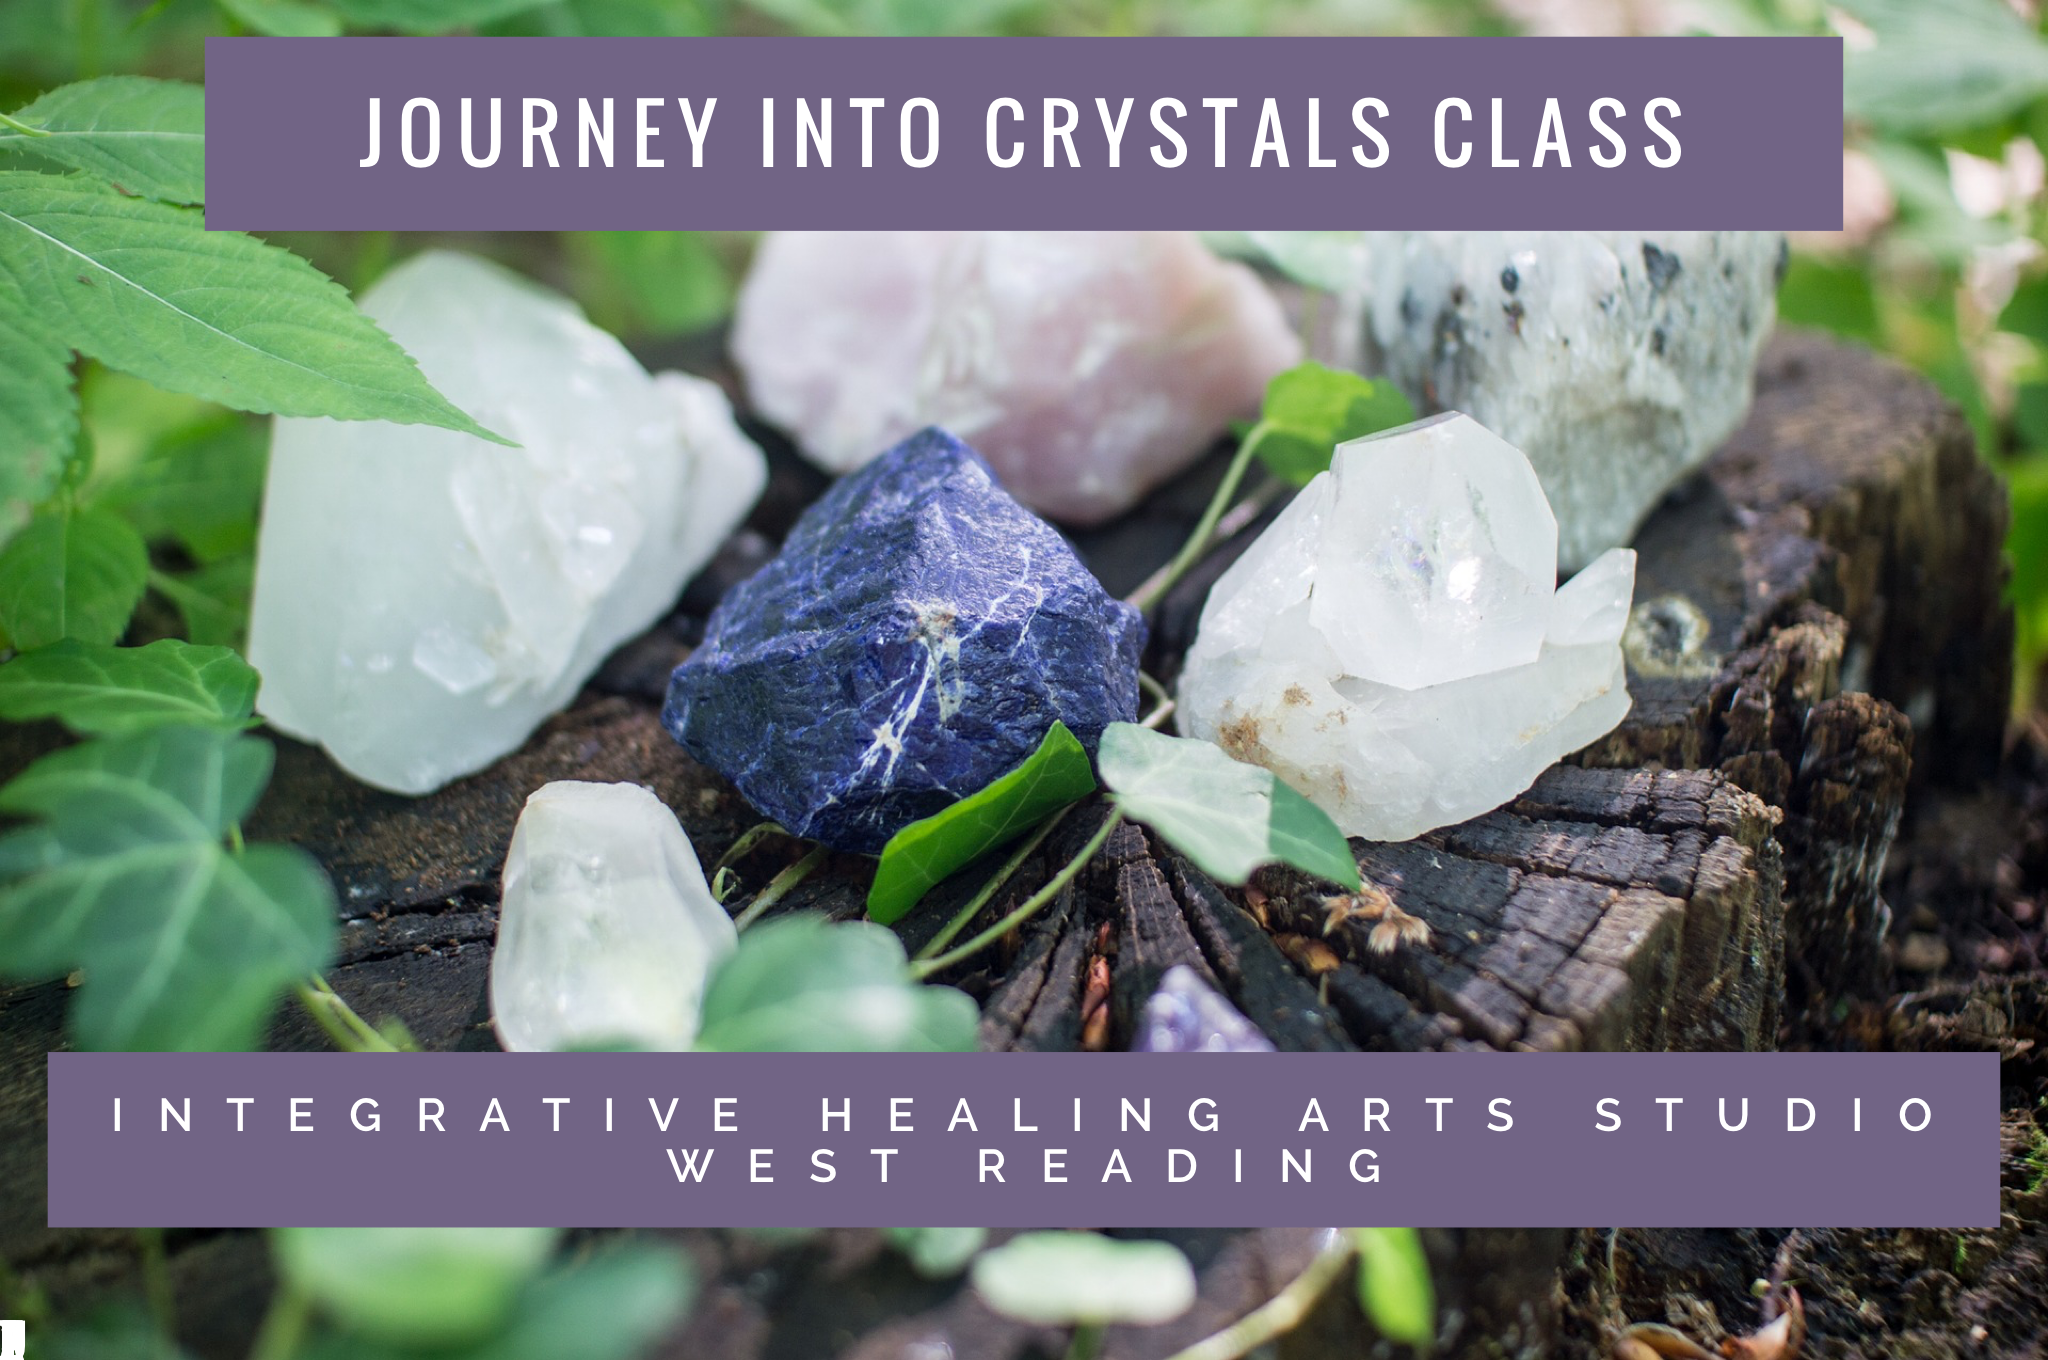 learn crystals, crystal healing, crystal therapy, crystals near me, crystal shop, integrative healing arts studio